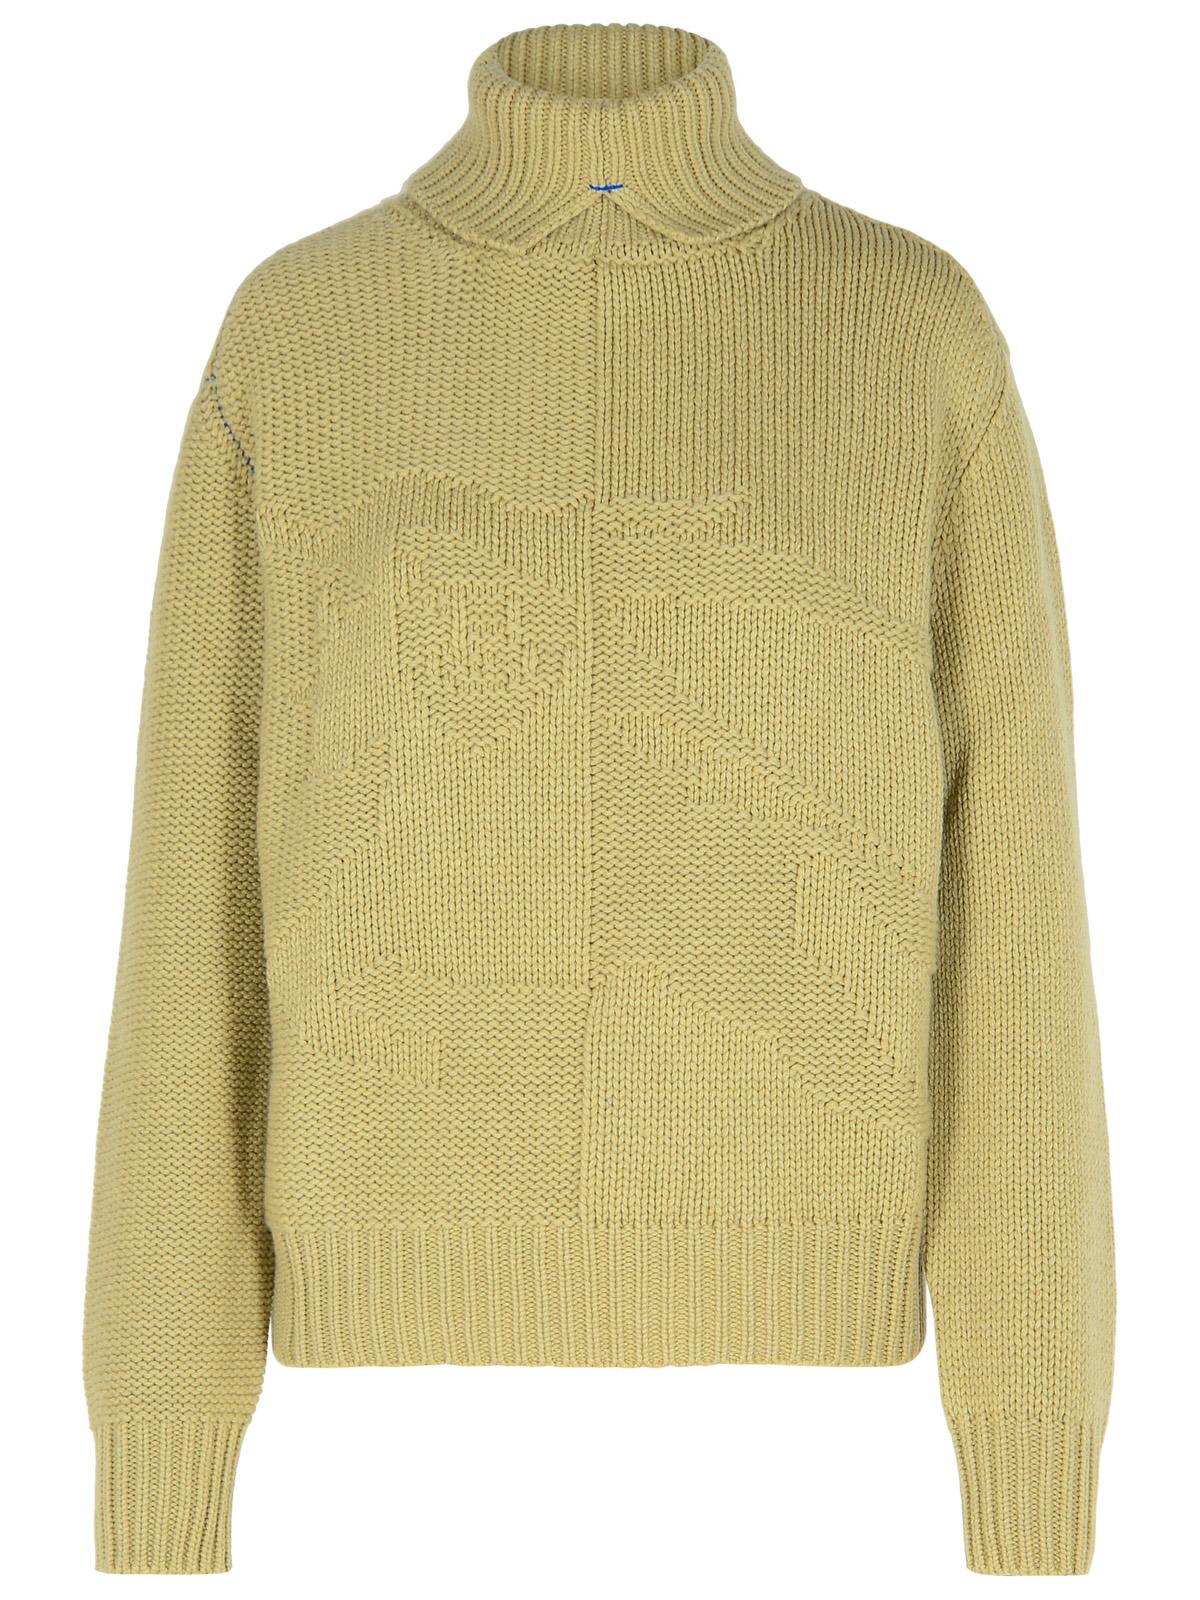 Green Cashmere Turtleneck Sweater